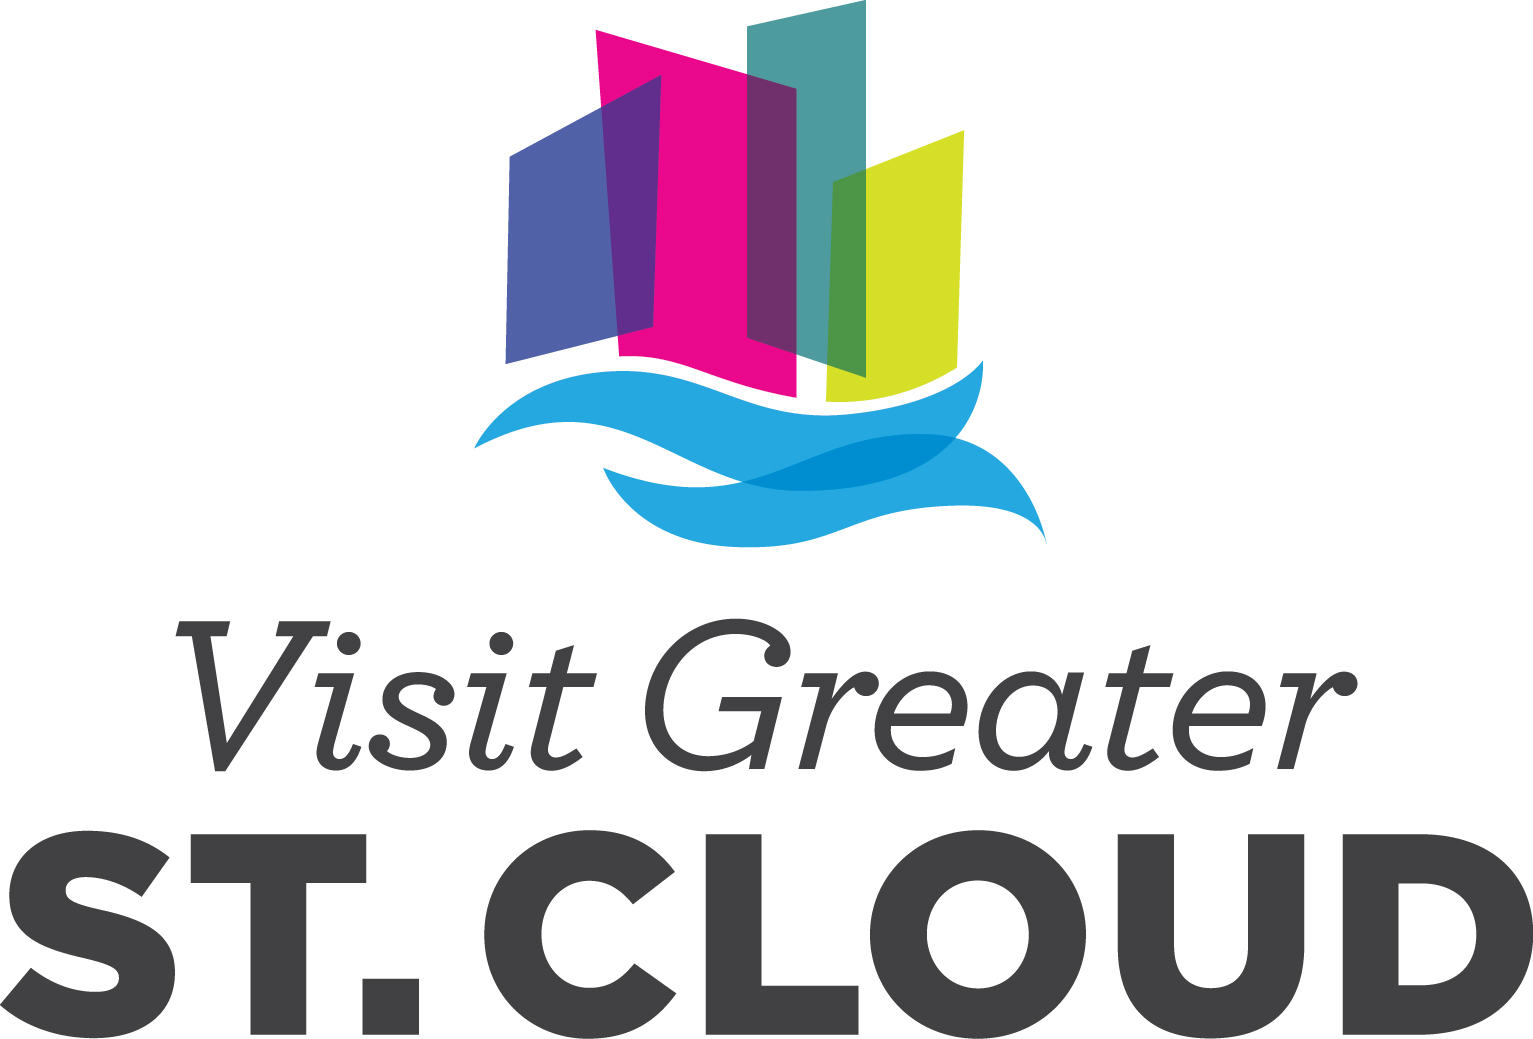 Visit Greater St. Cloud